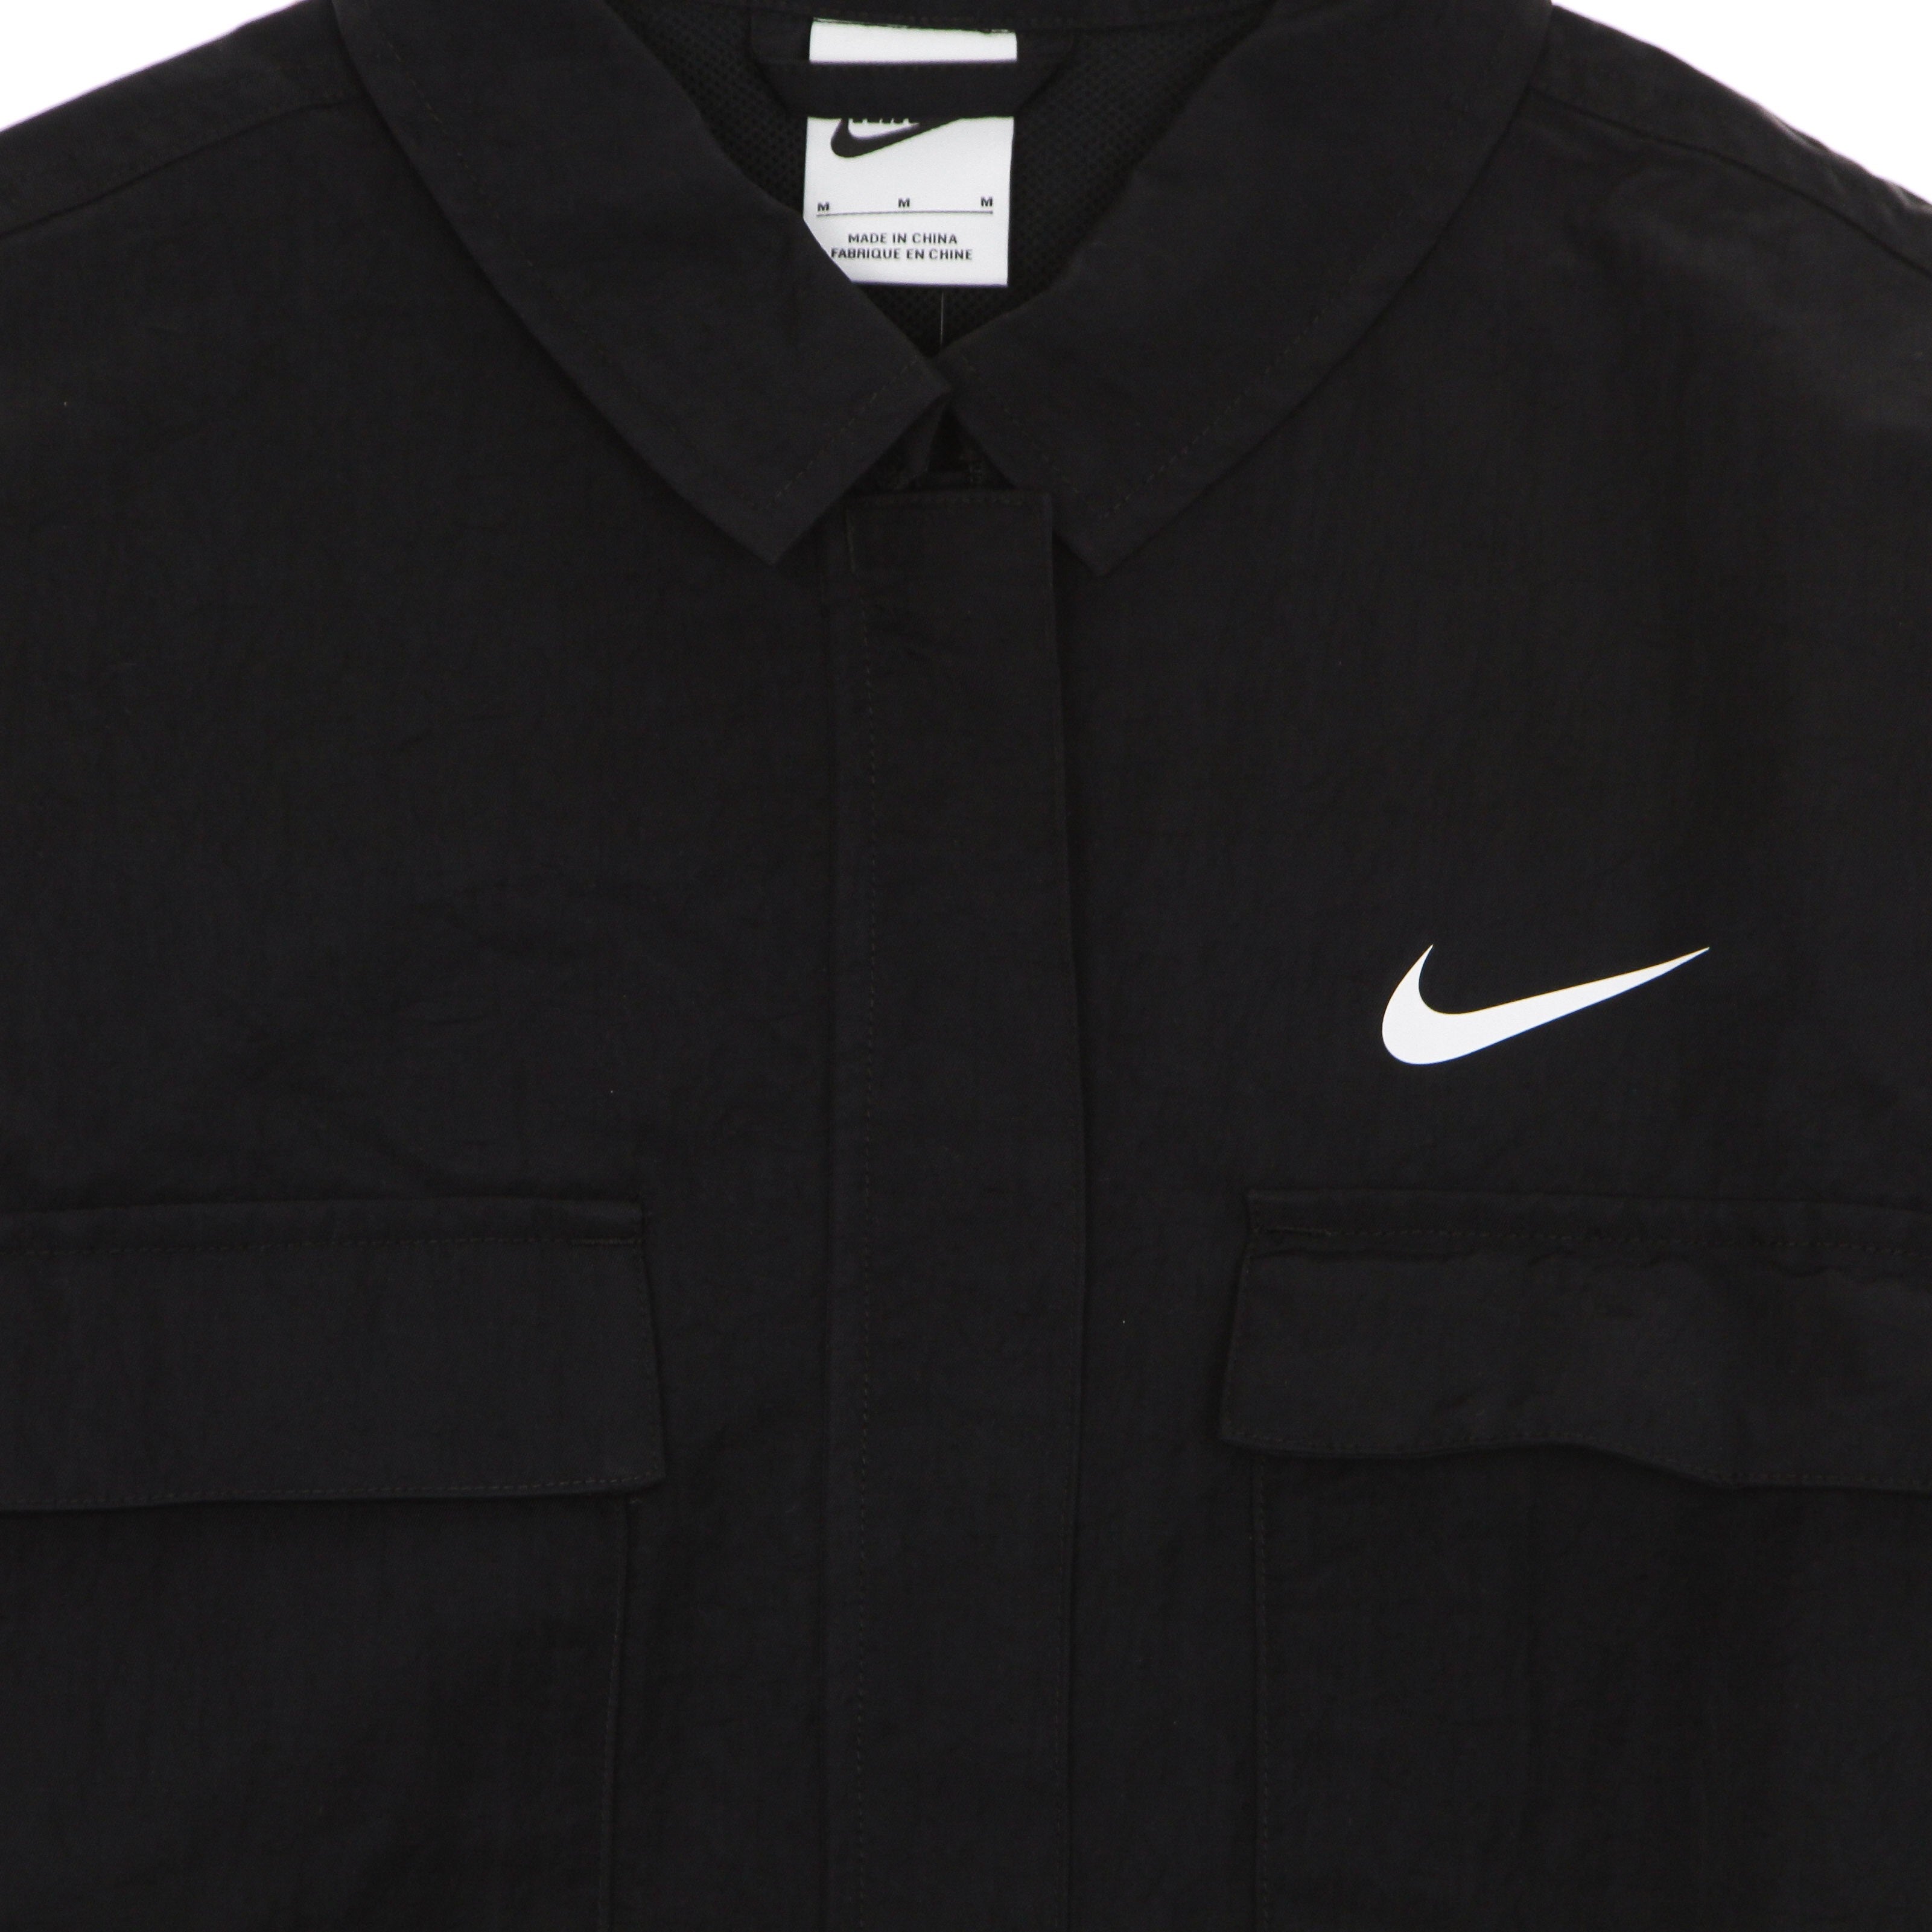 Nike, Giubbotto Donna Essential Woven Field Jacket, 